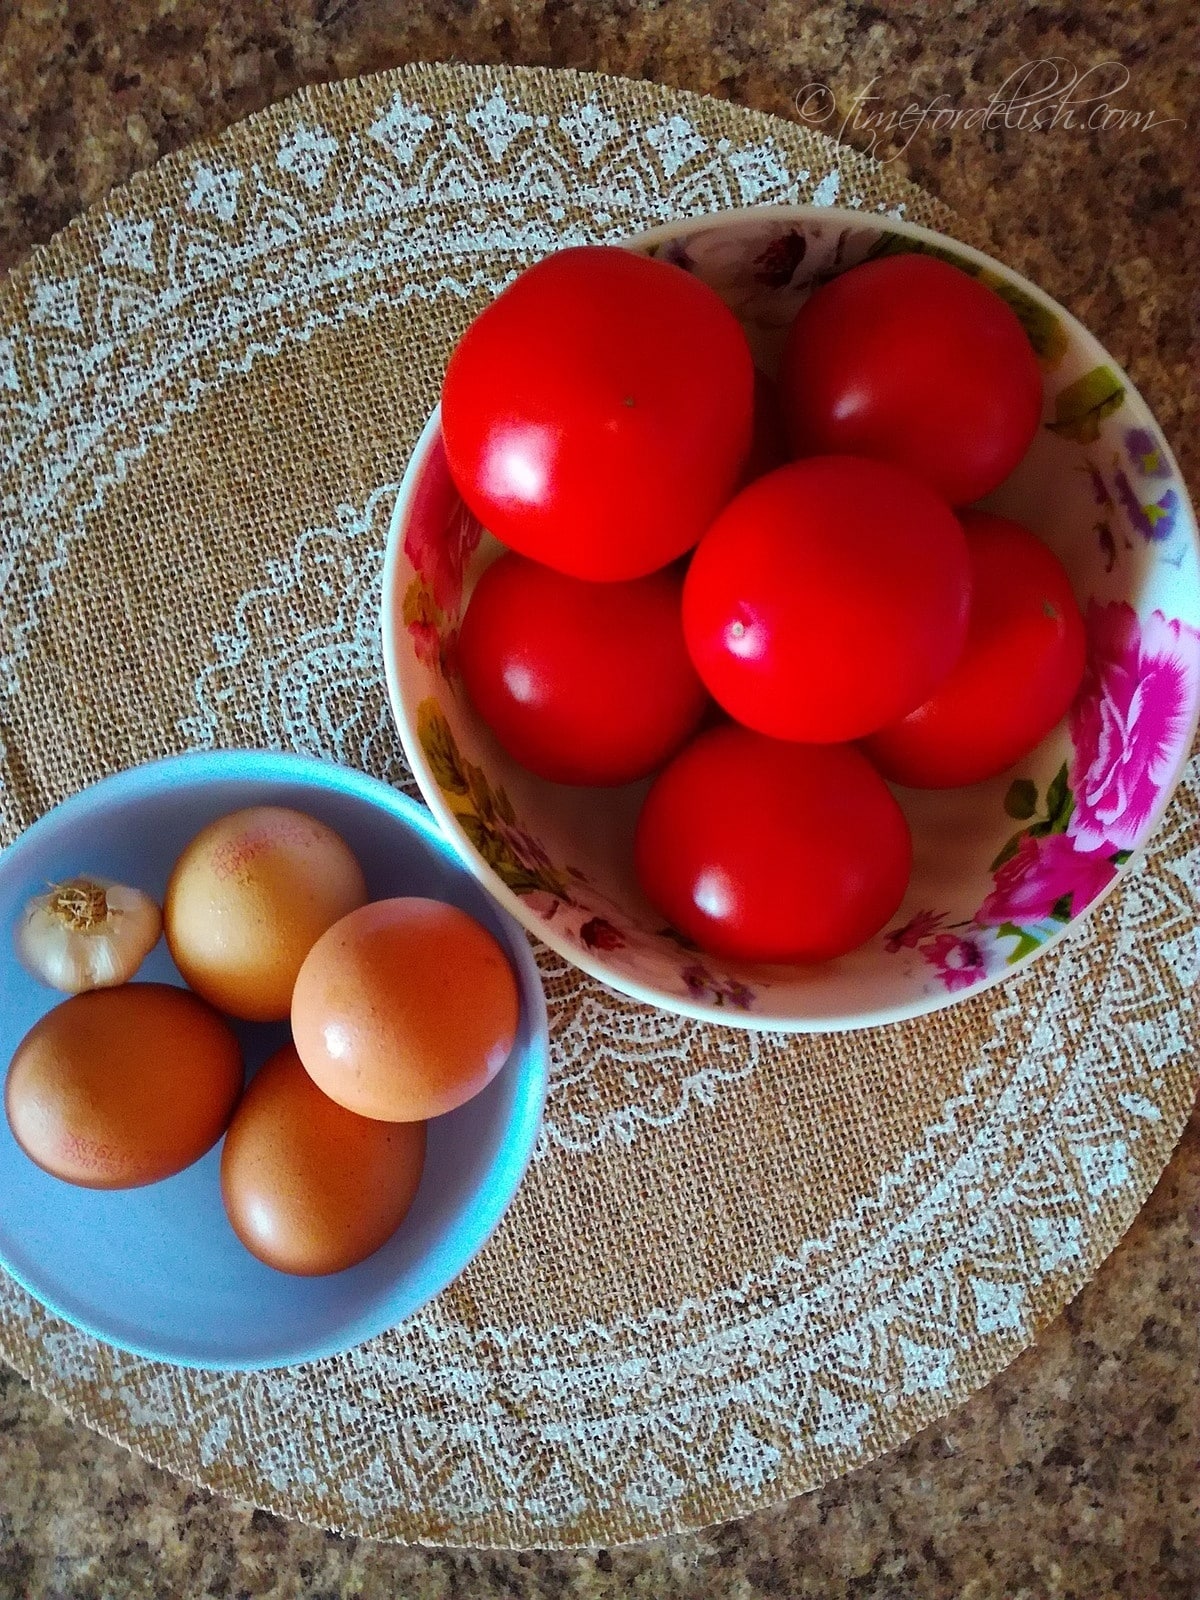 tomato egg ingredients